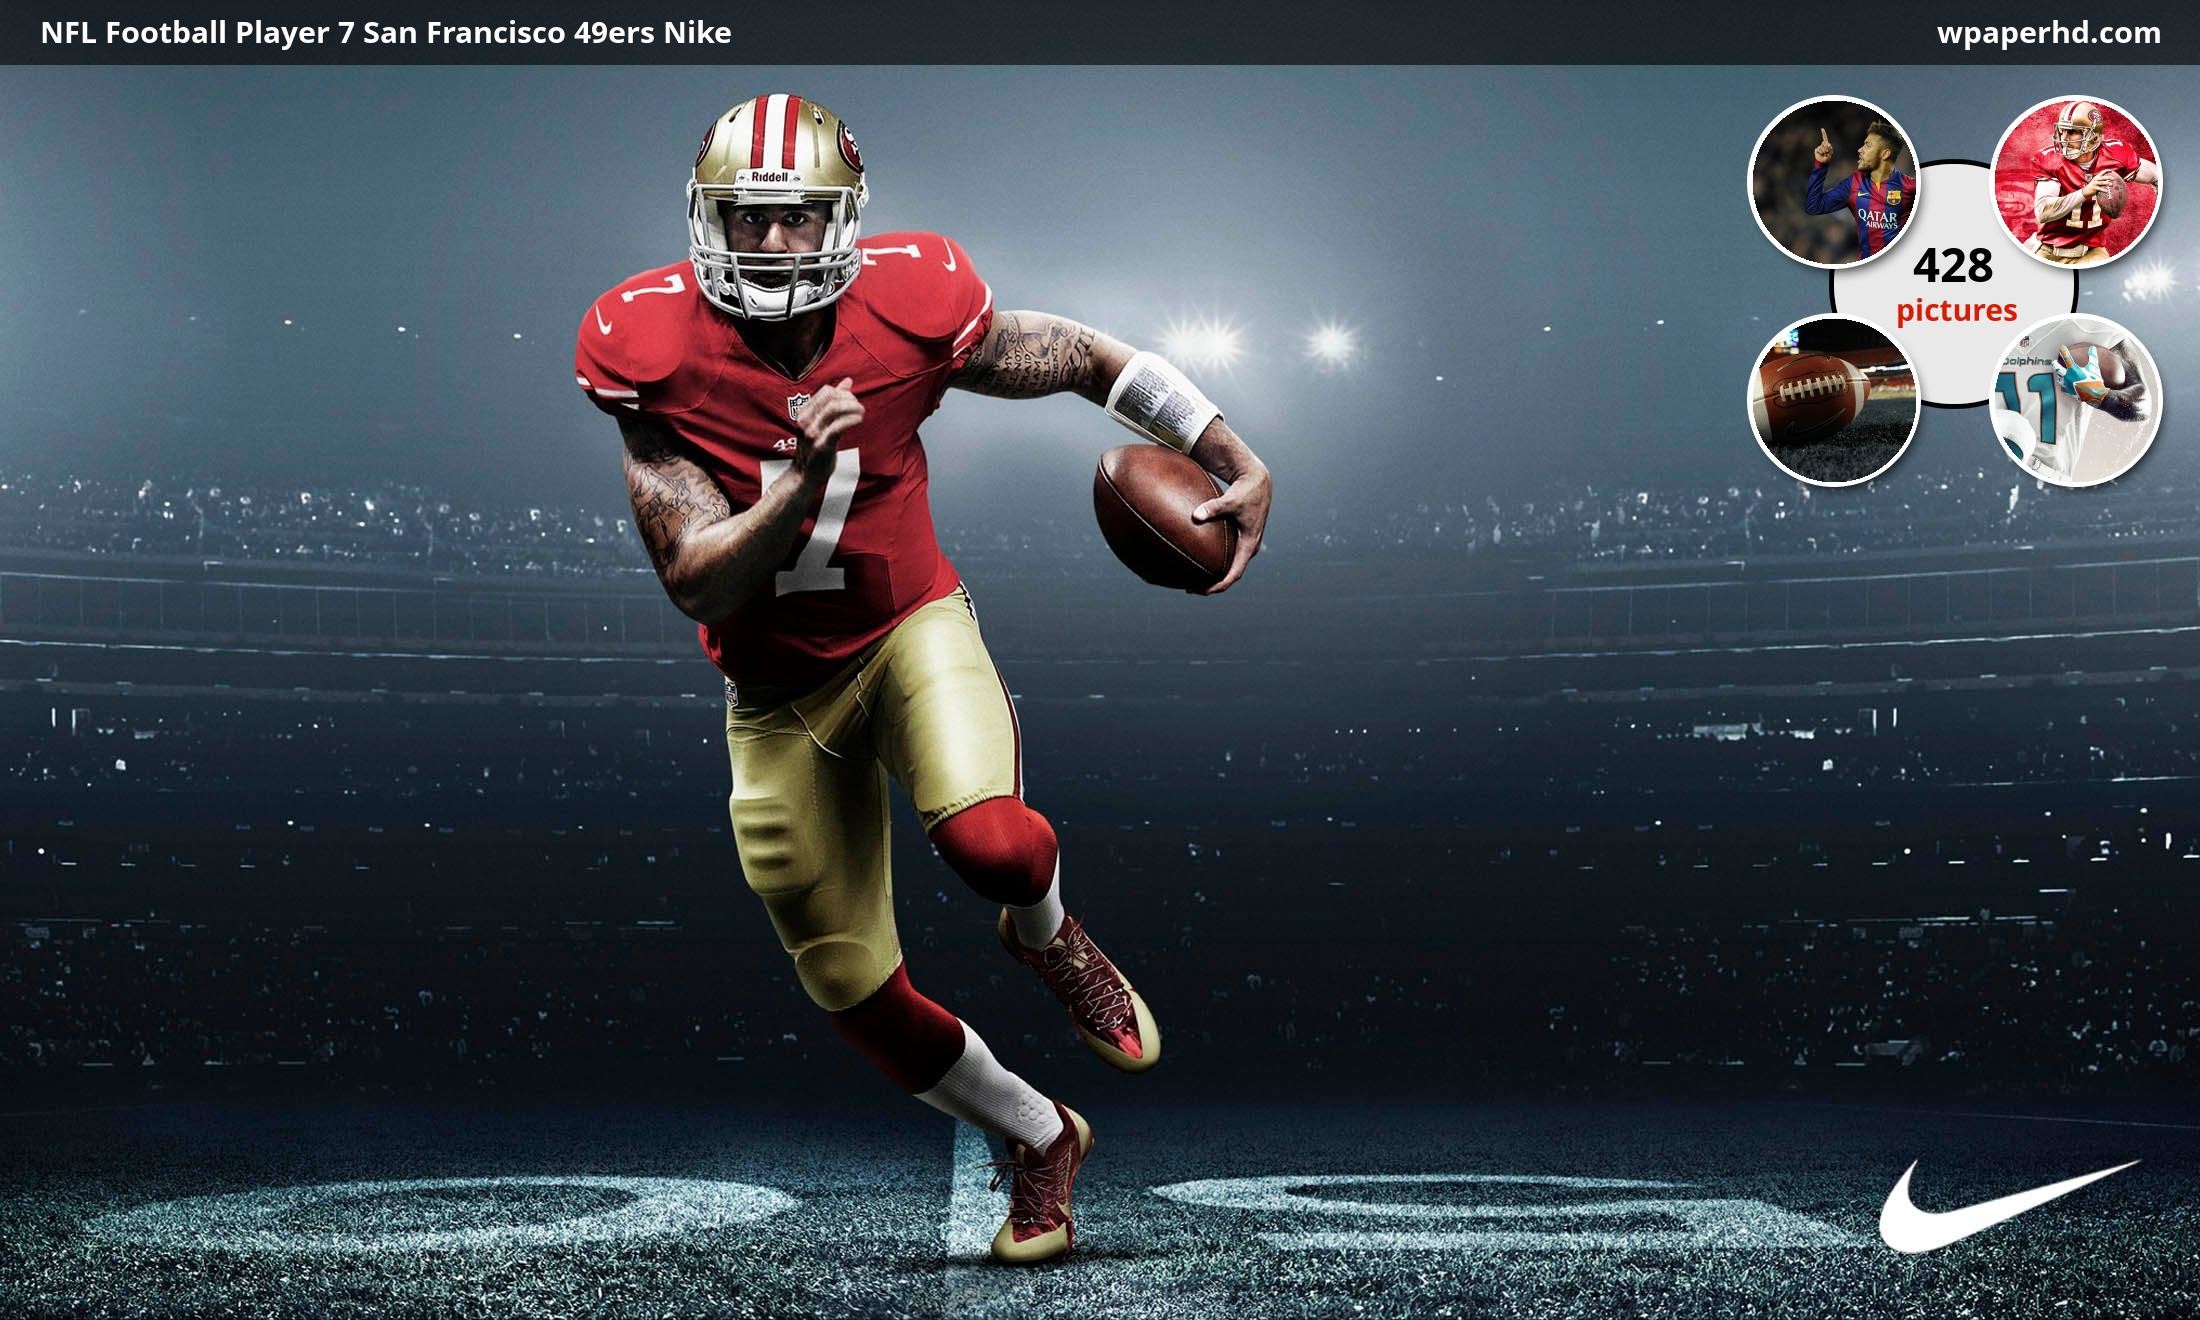 2200x1320 NFL Football Player 7 San Francisco 49ers Nike Wallpaper